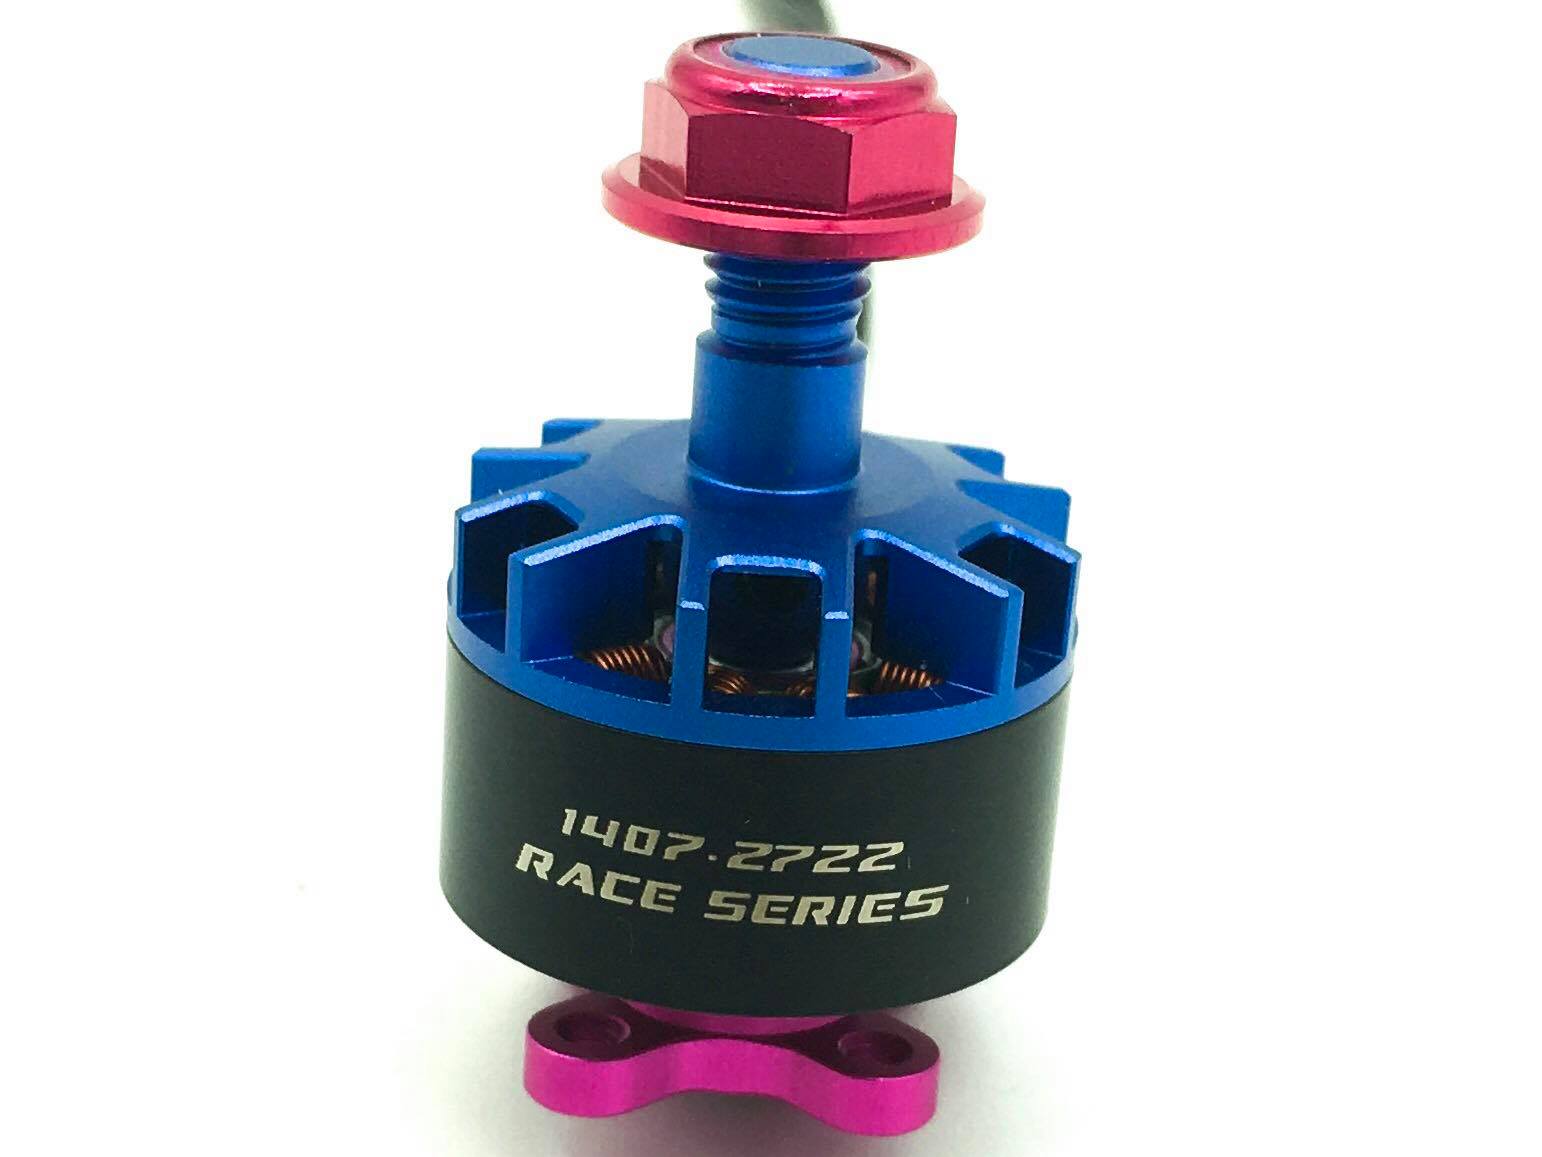 Hyperlite 1407-2722 Race Series Perfect Floss Motor